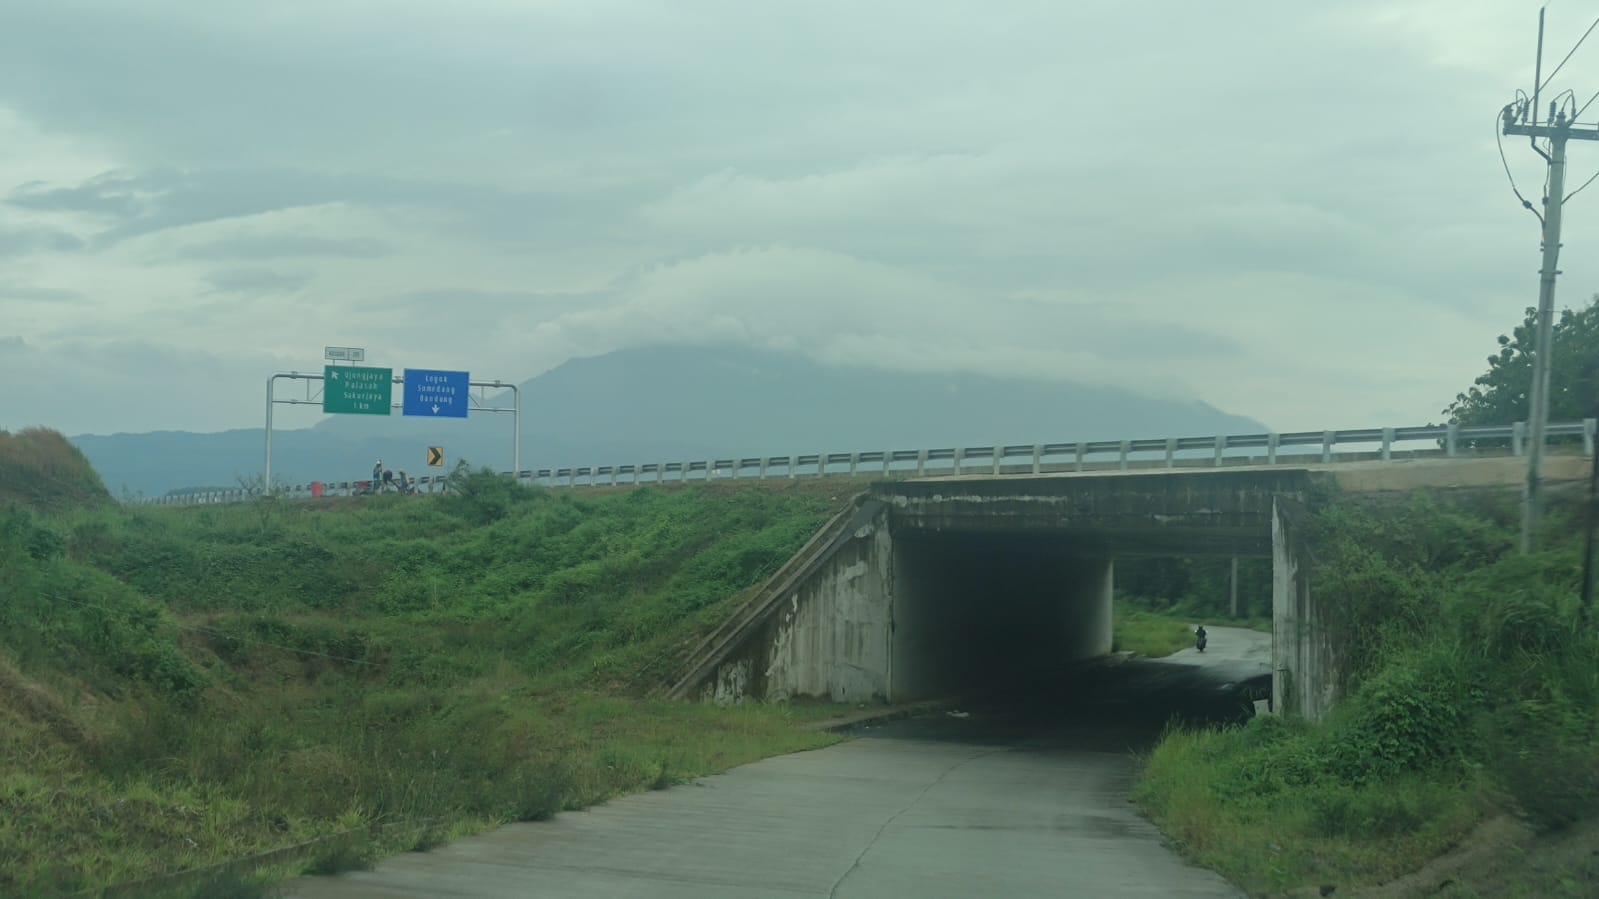 DEKET BANGET! Dari Tol Cisumdawu ke Indramayu Keluar Lewat Gerbang Tol Ini Hanya Berjarak 10 Km